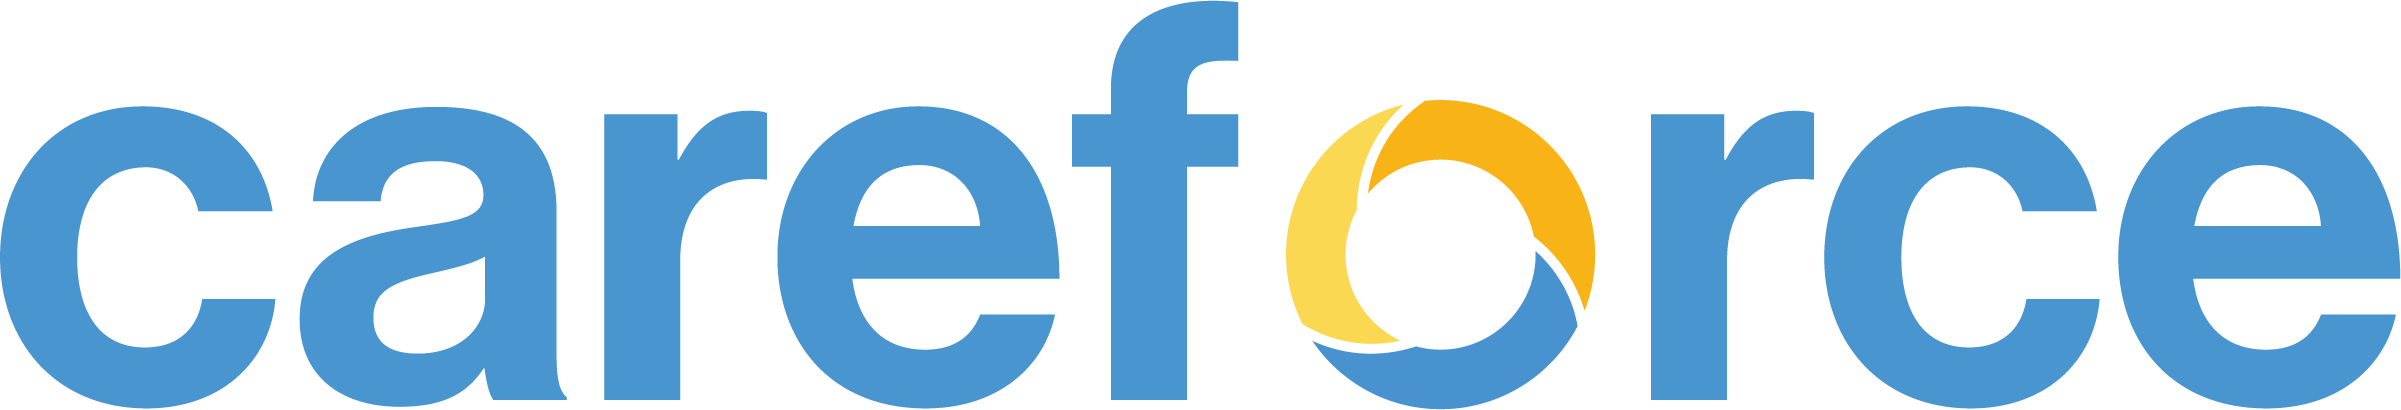 Company Logo For Careforce'